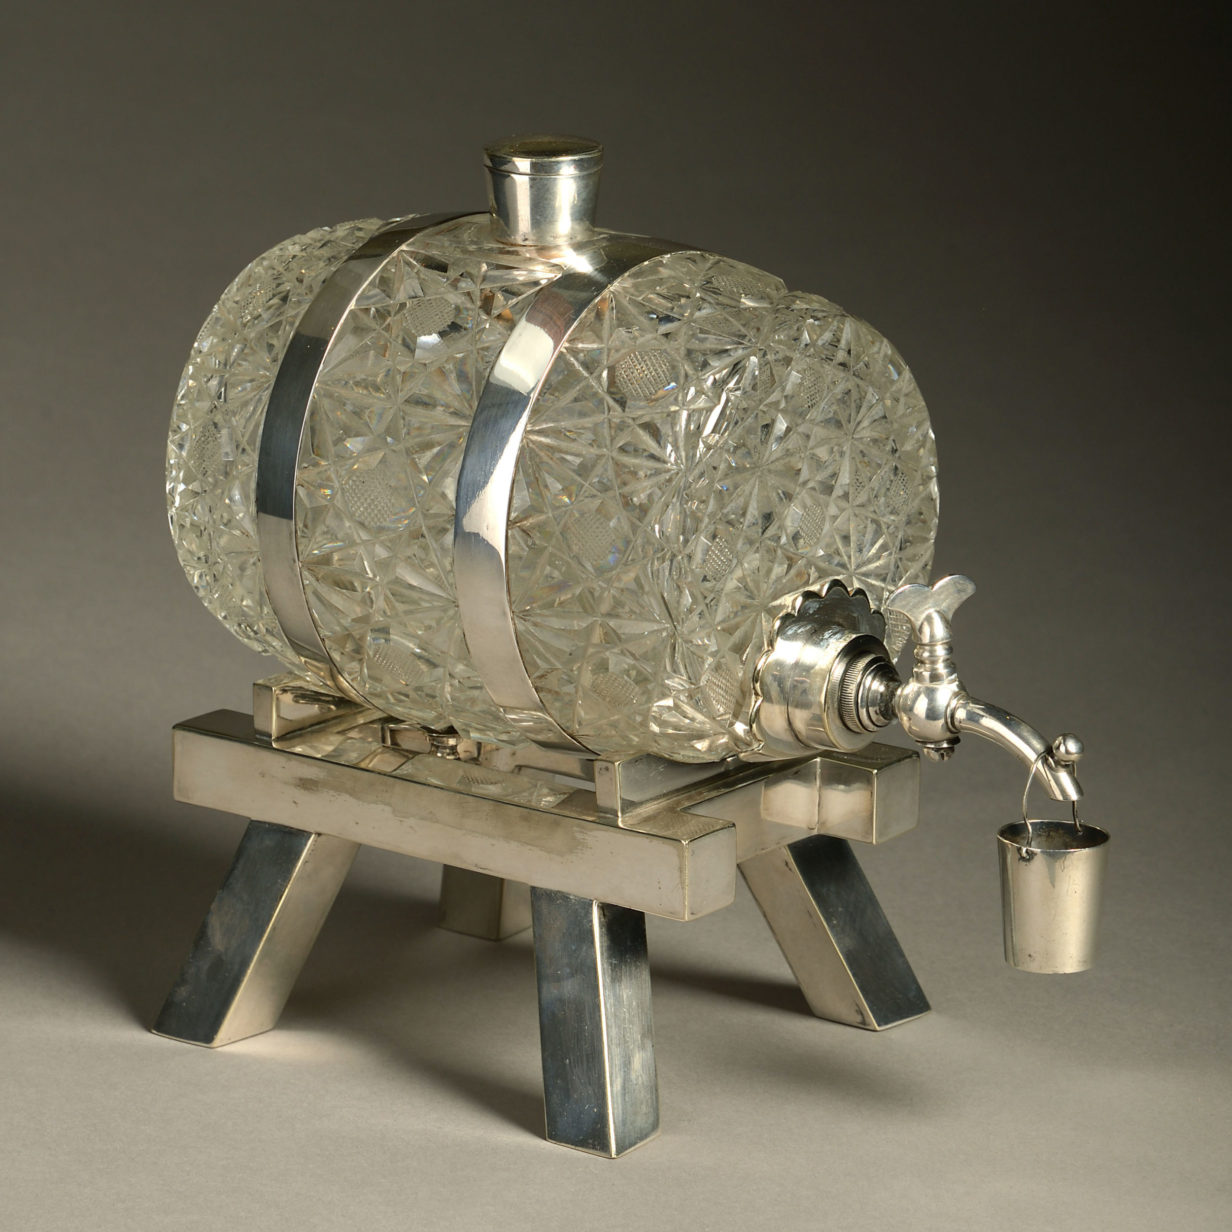 An early 20th century cut glass novelty spirit barrel